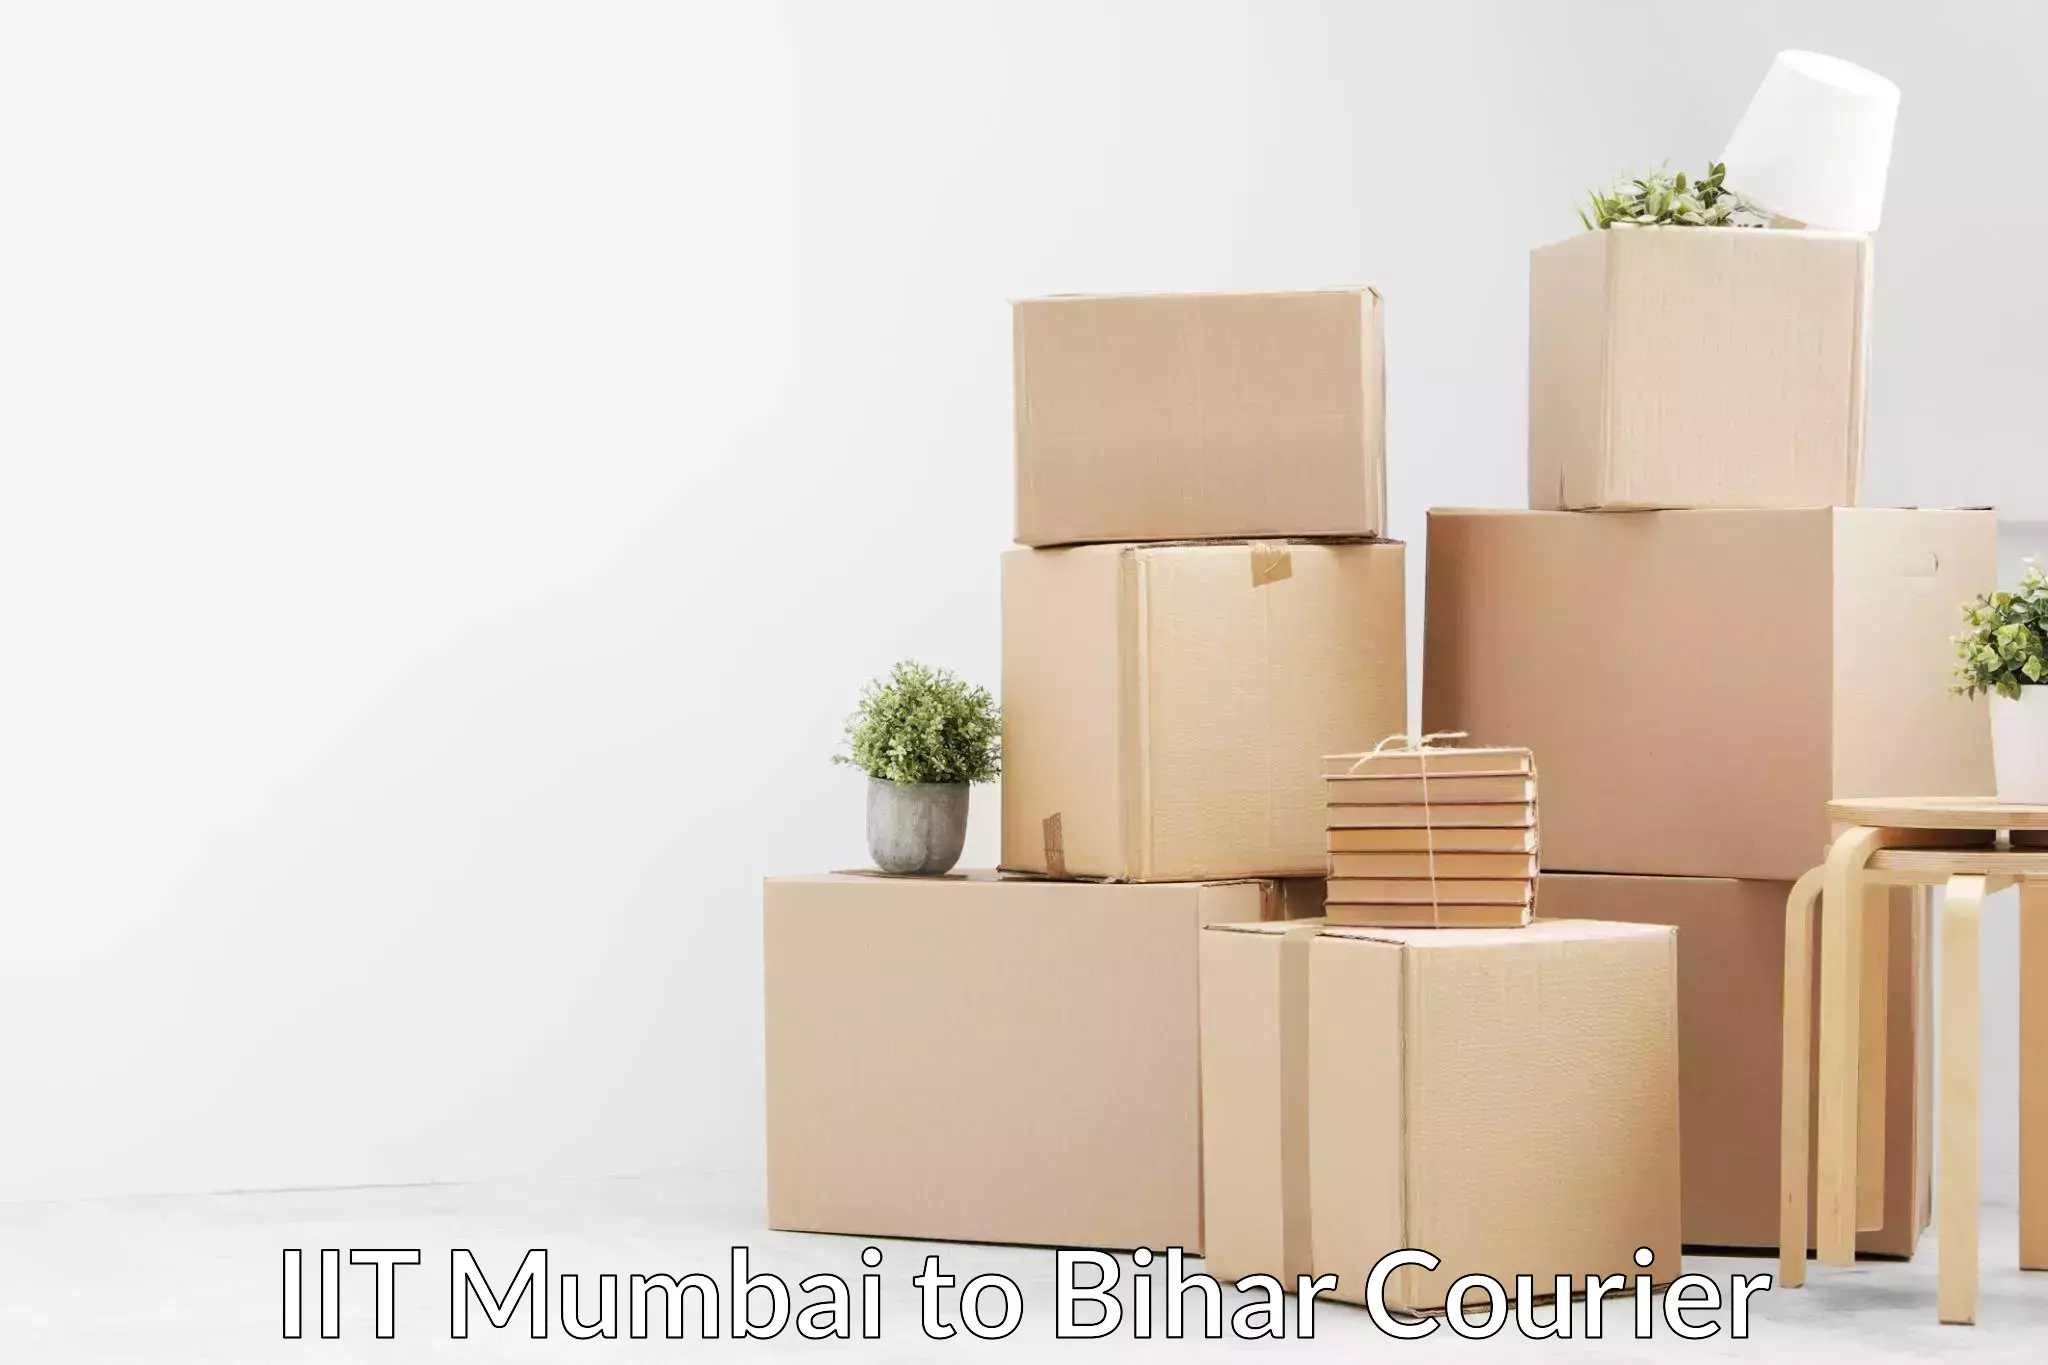 Home moving service IIT Mumbai to Fatwah